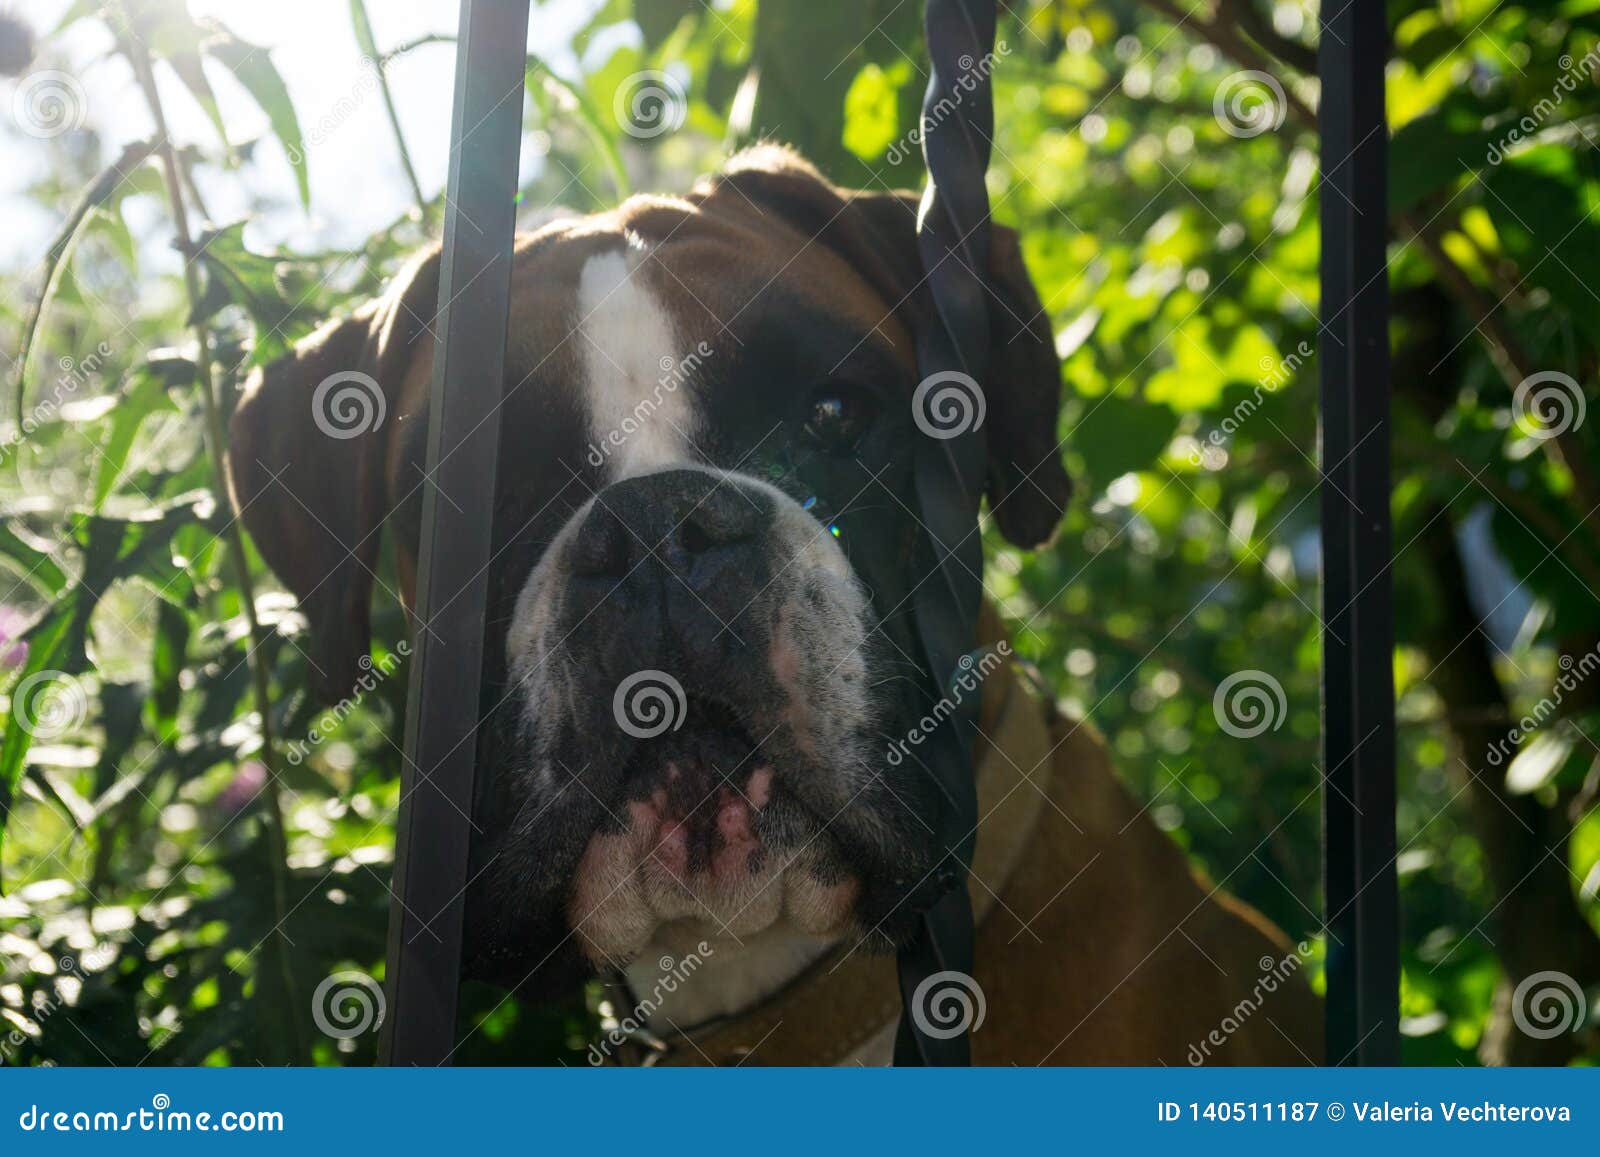 Boxer Dog Behind The Fence. Slovakia Stock Image Image of happy, emotions 140511187